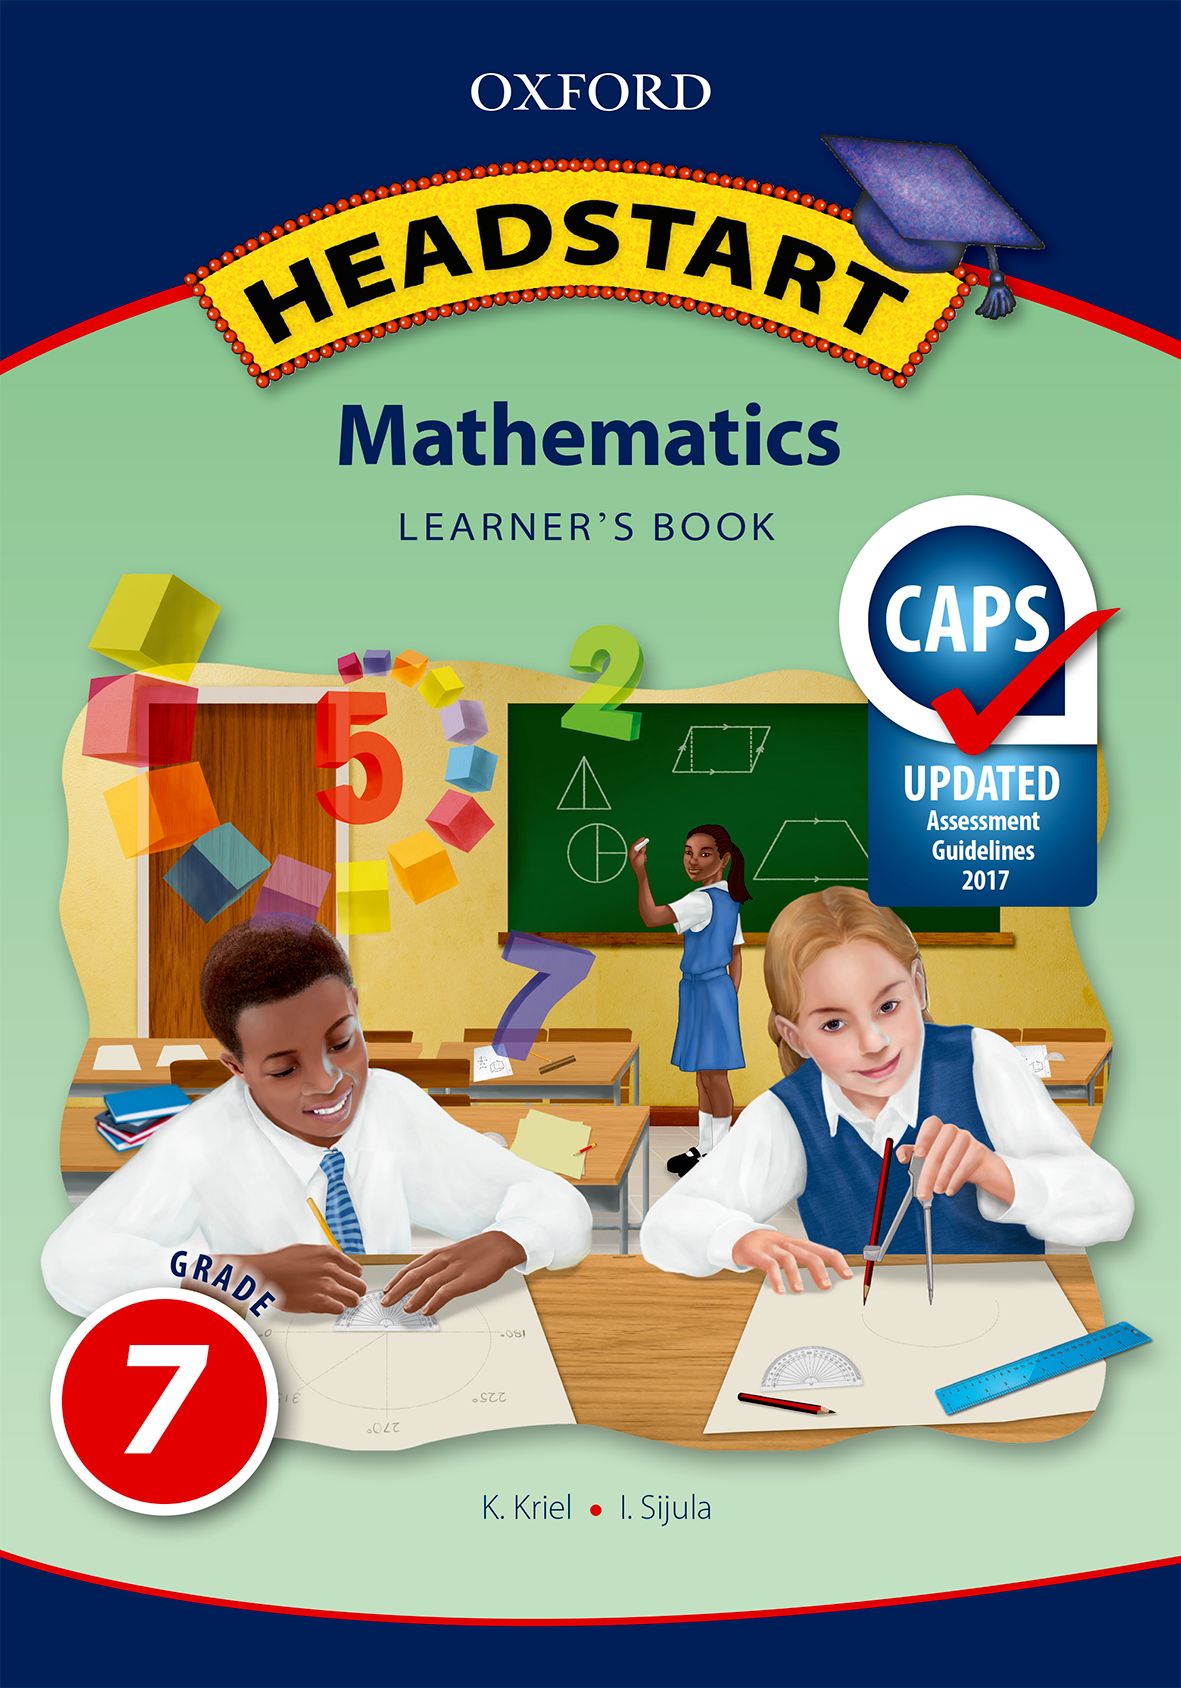 Oxford Headstart Mathematics Grade 7 Learner's Book